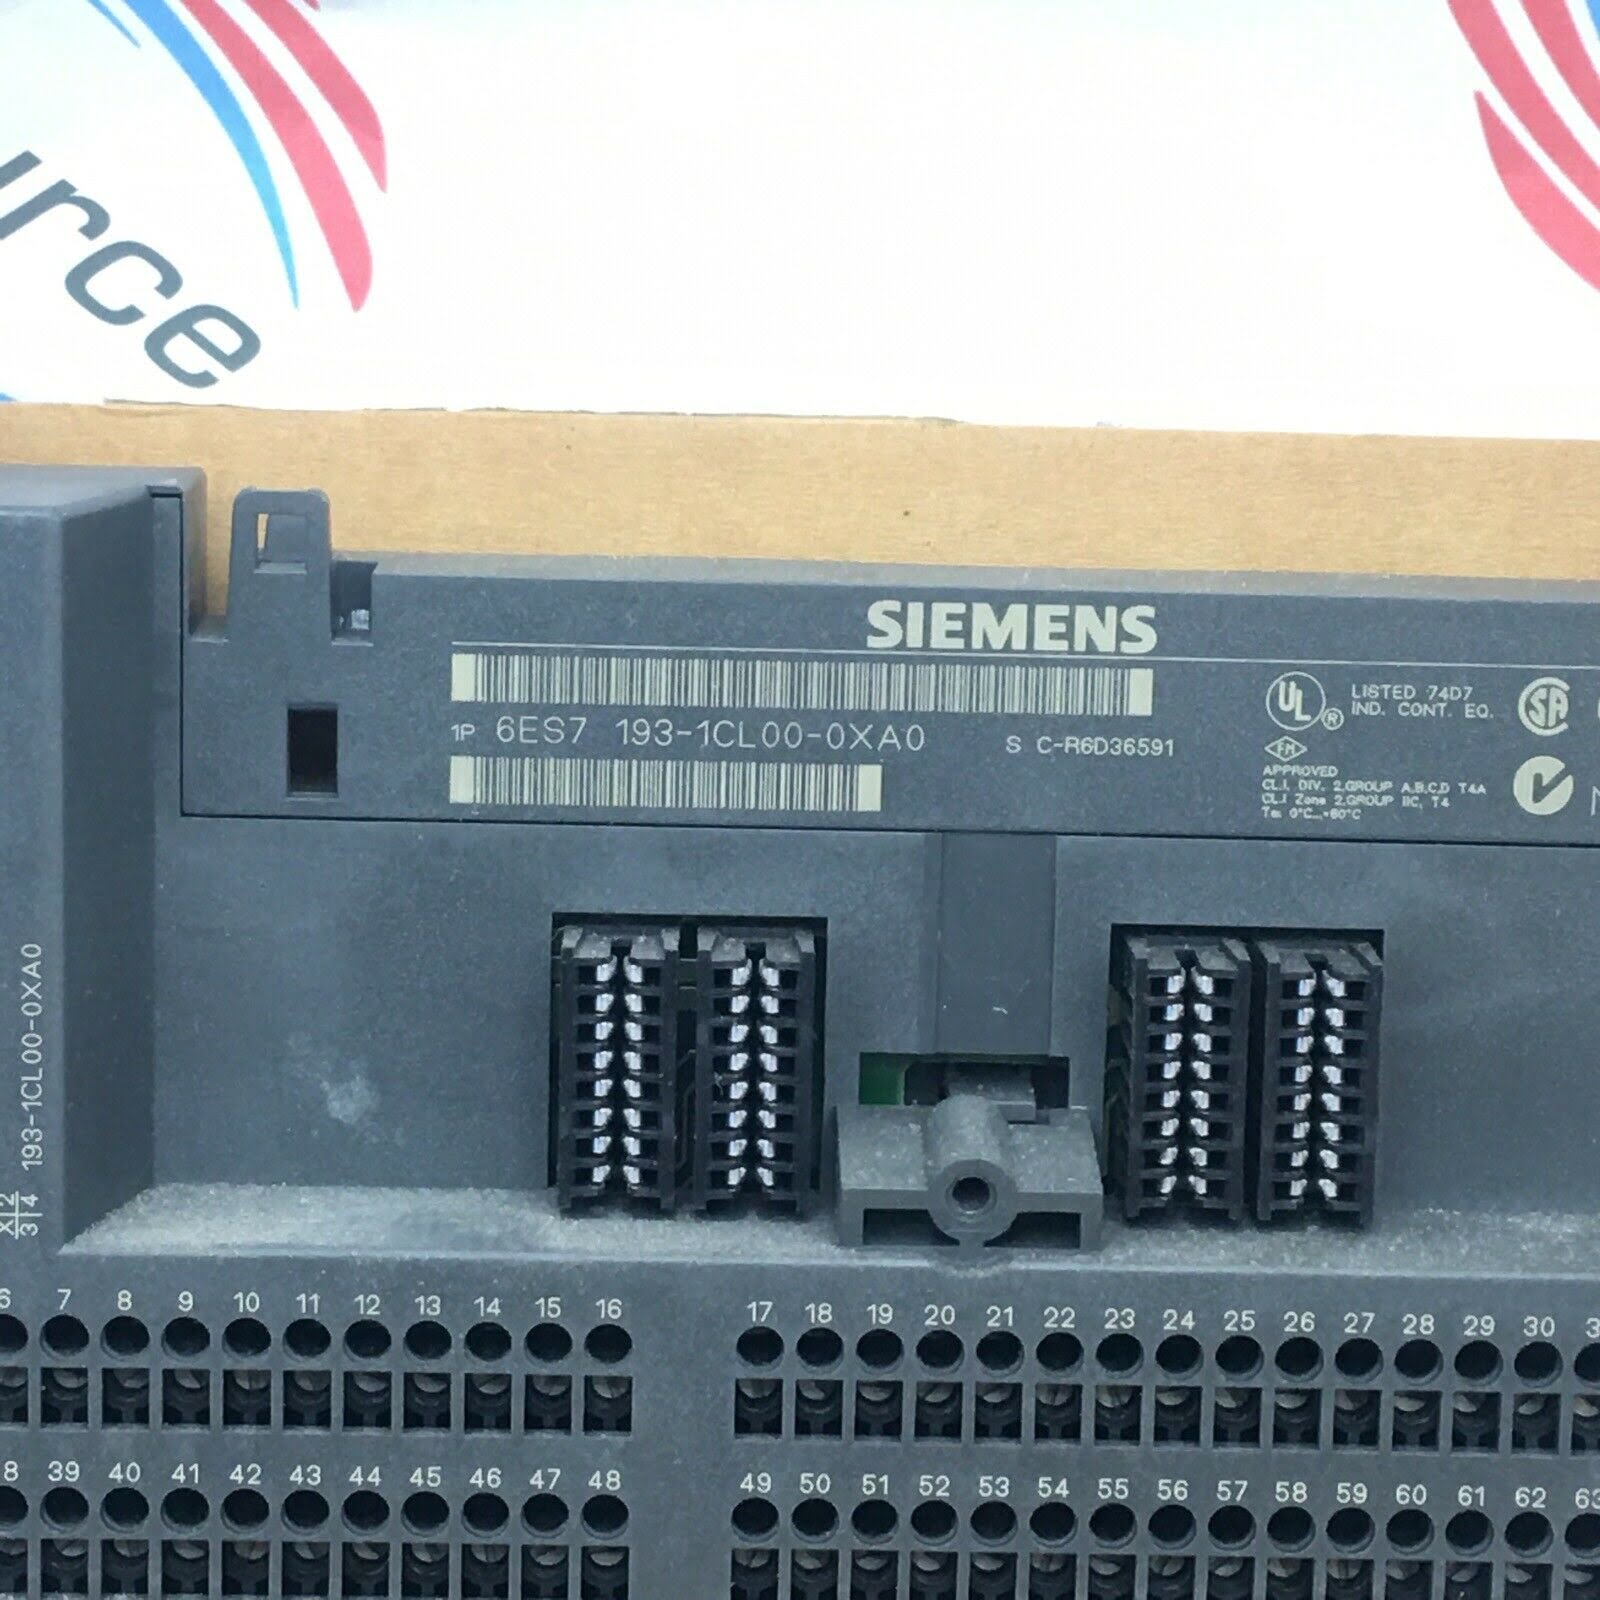 Siemens 6ES7193-1CL00-0XA0 